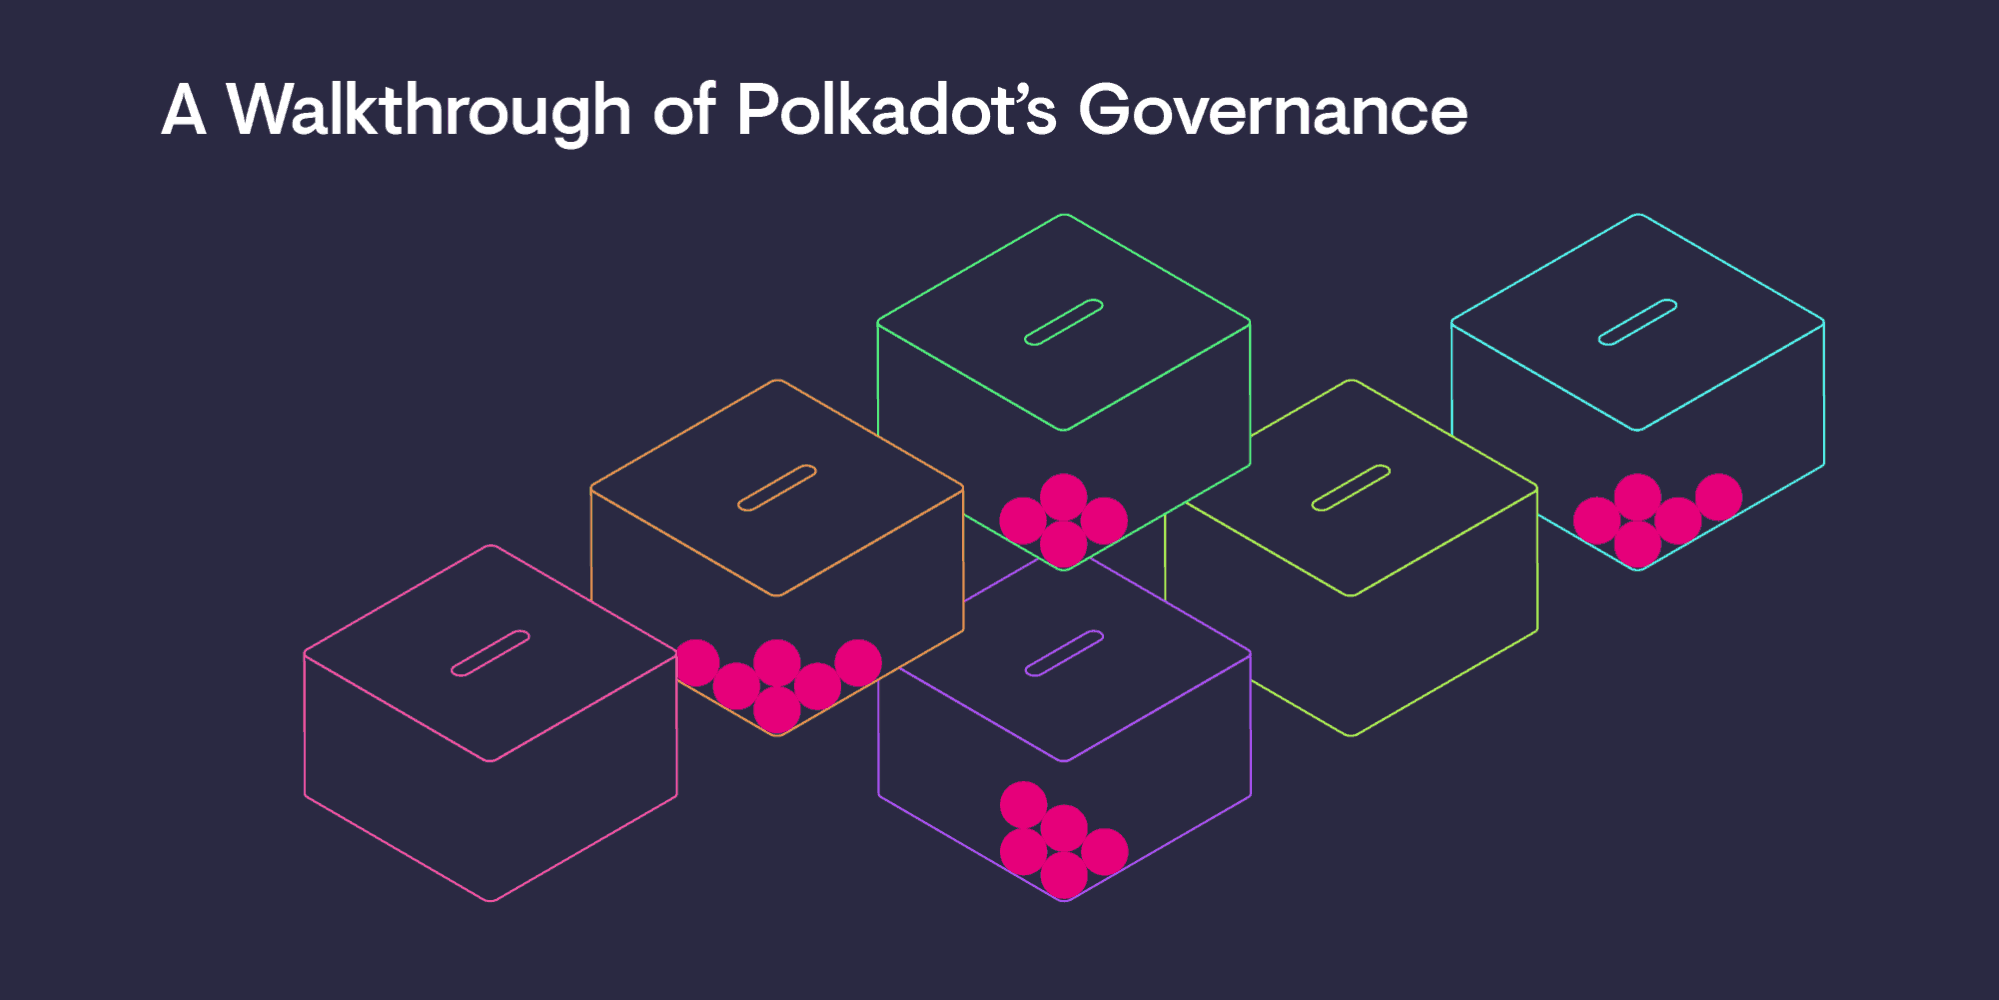 A Walkthrough of Polkadots Governance